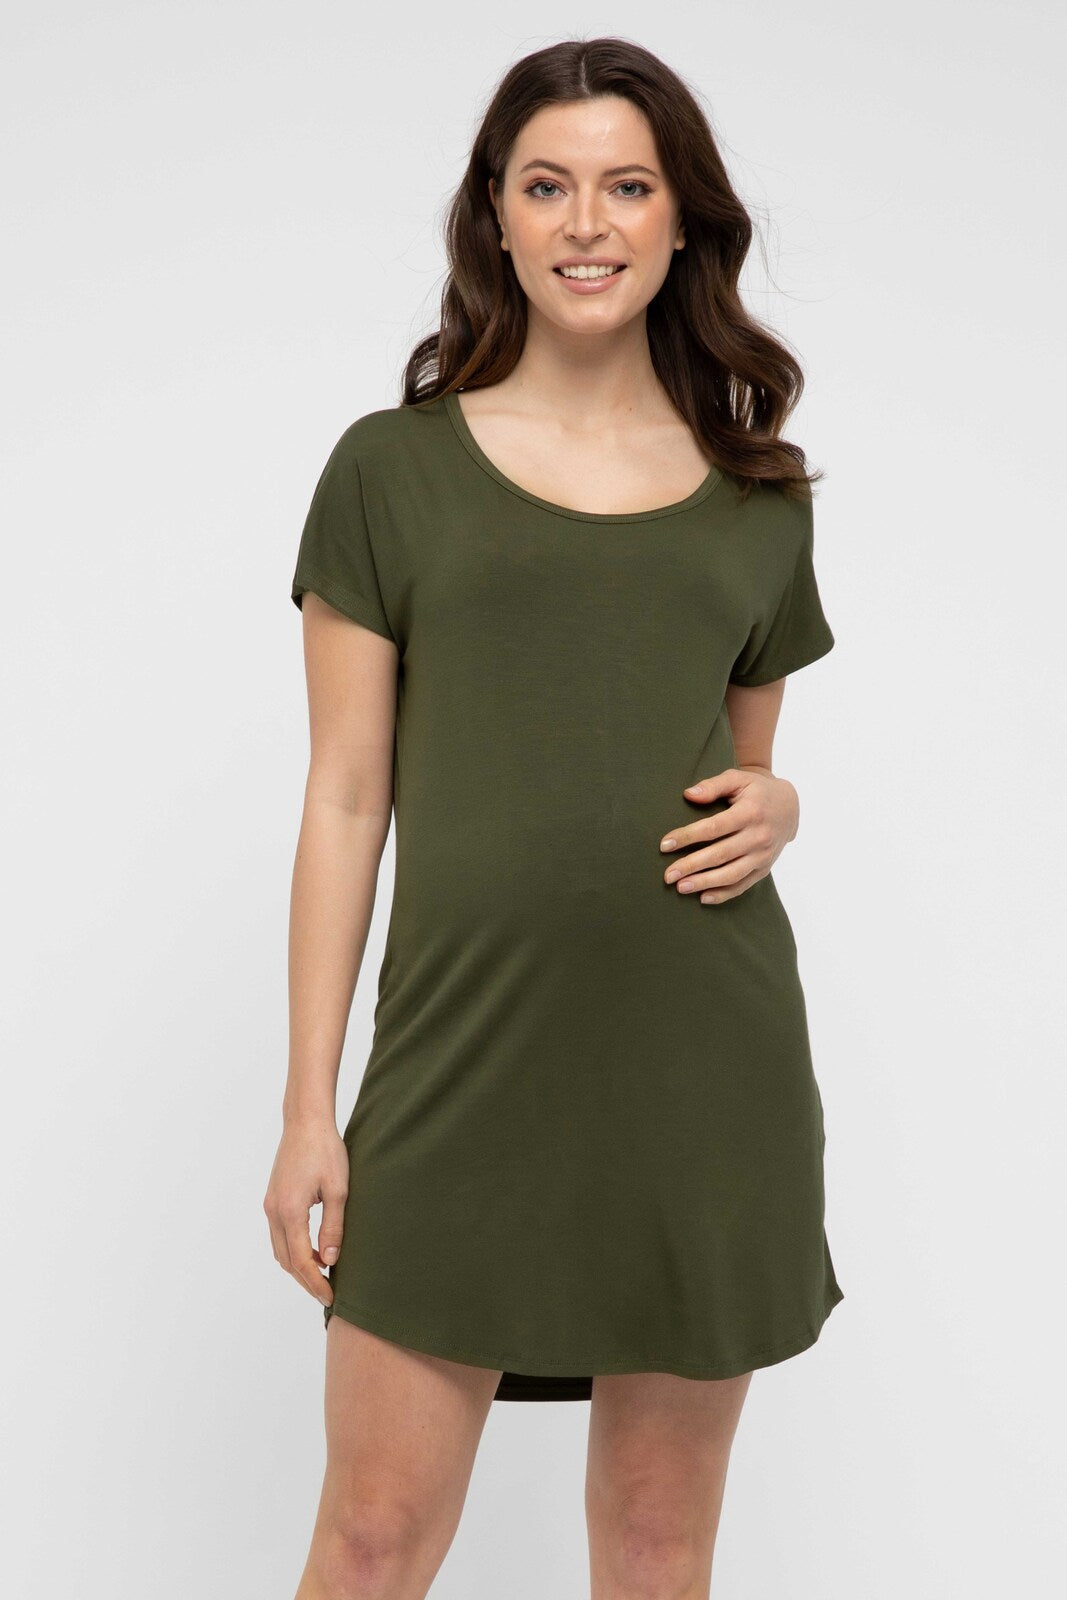 Organic Bamboo Niah T-Shirt Maternity Dress Dress from Bamboo Body maternity online store brisbane sydney perth australia